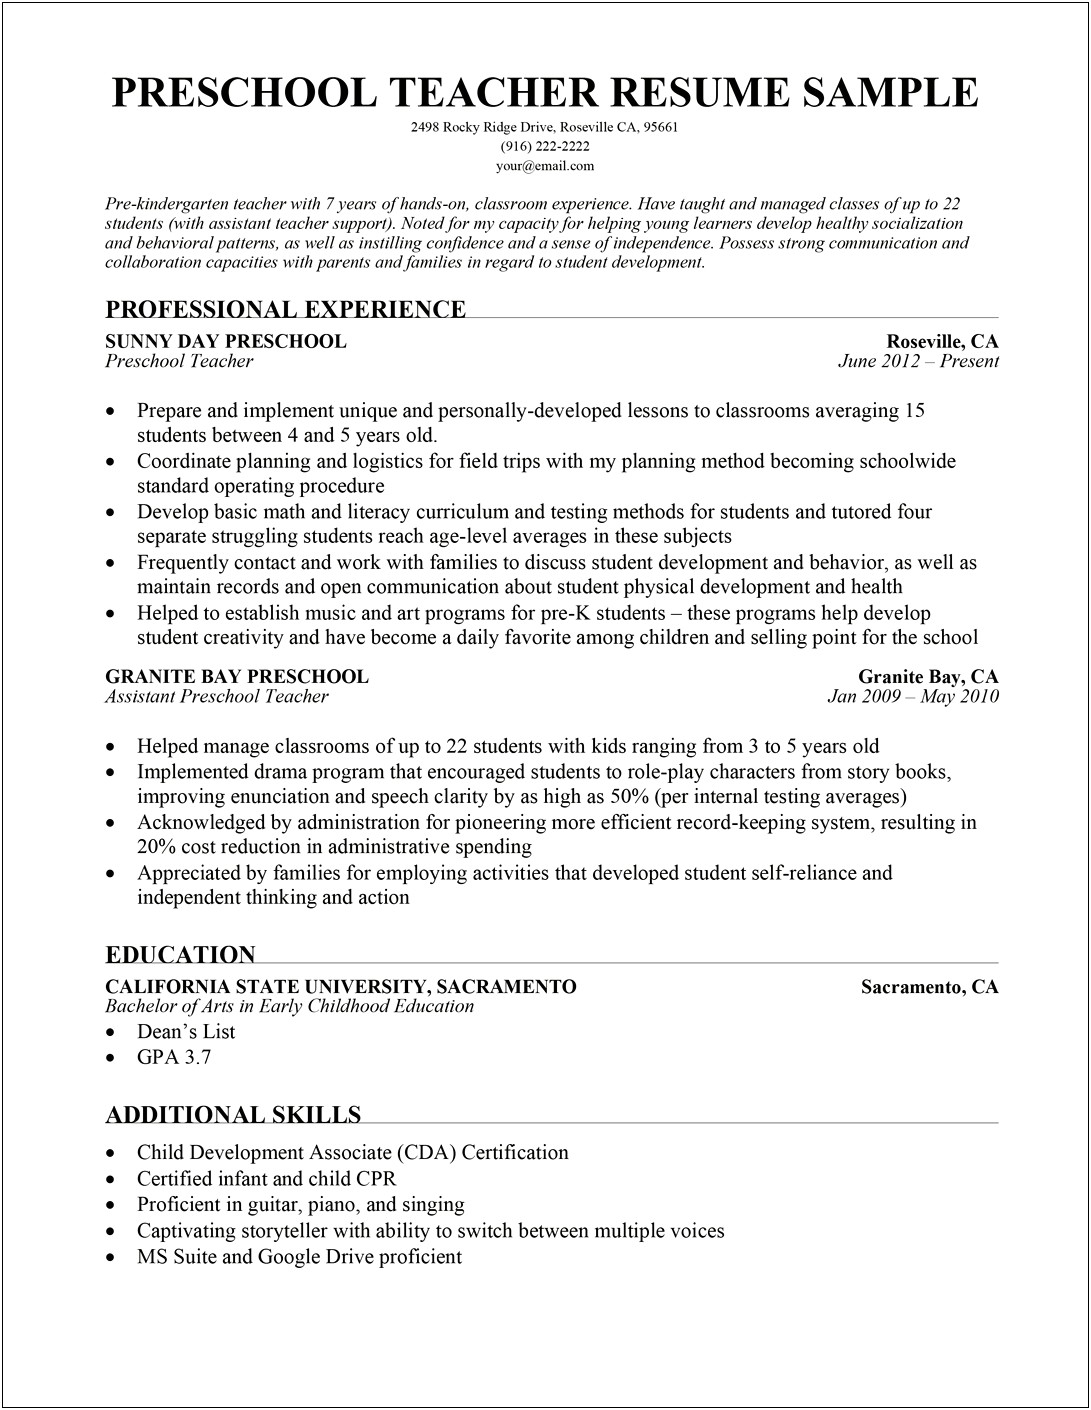 Additional Skills To Write Down On Teacher Resume